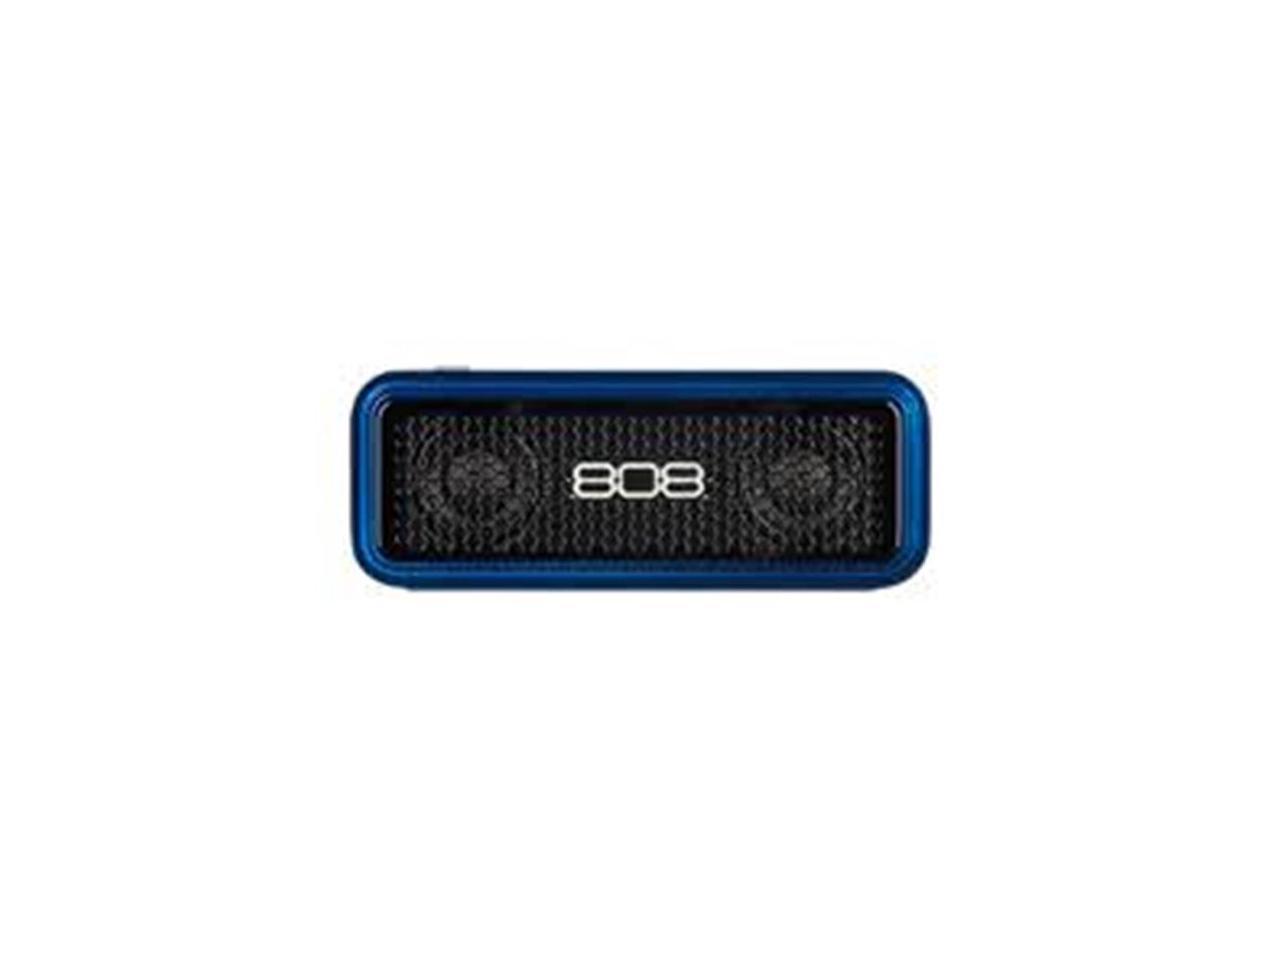 808 bluetooth speaker sp260